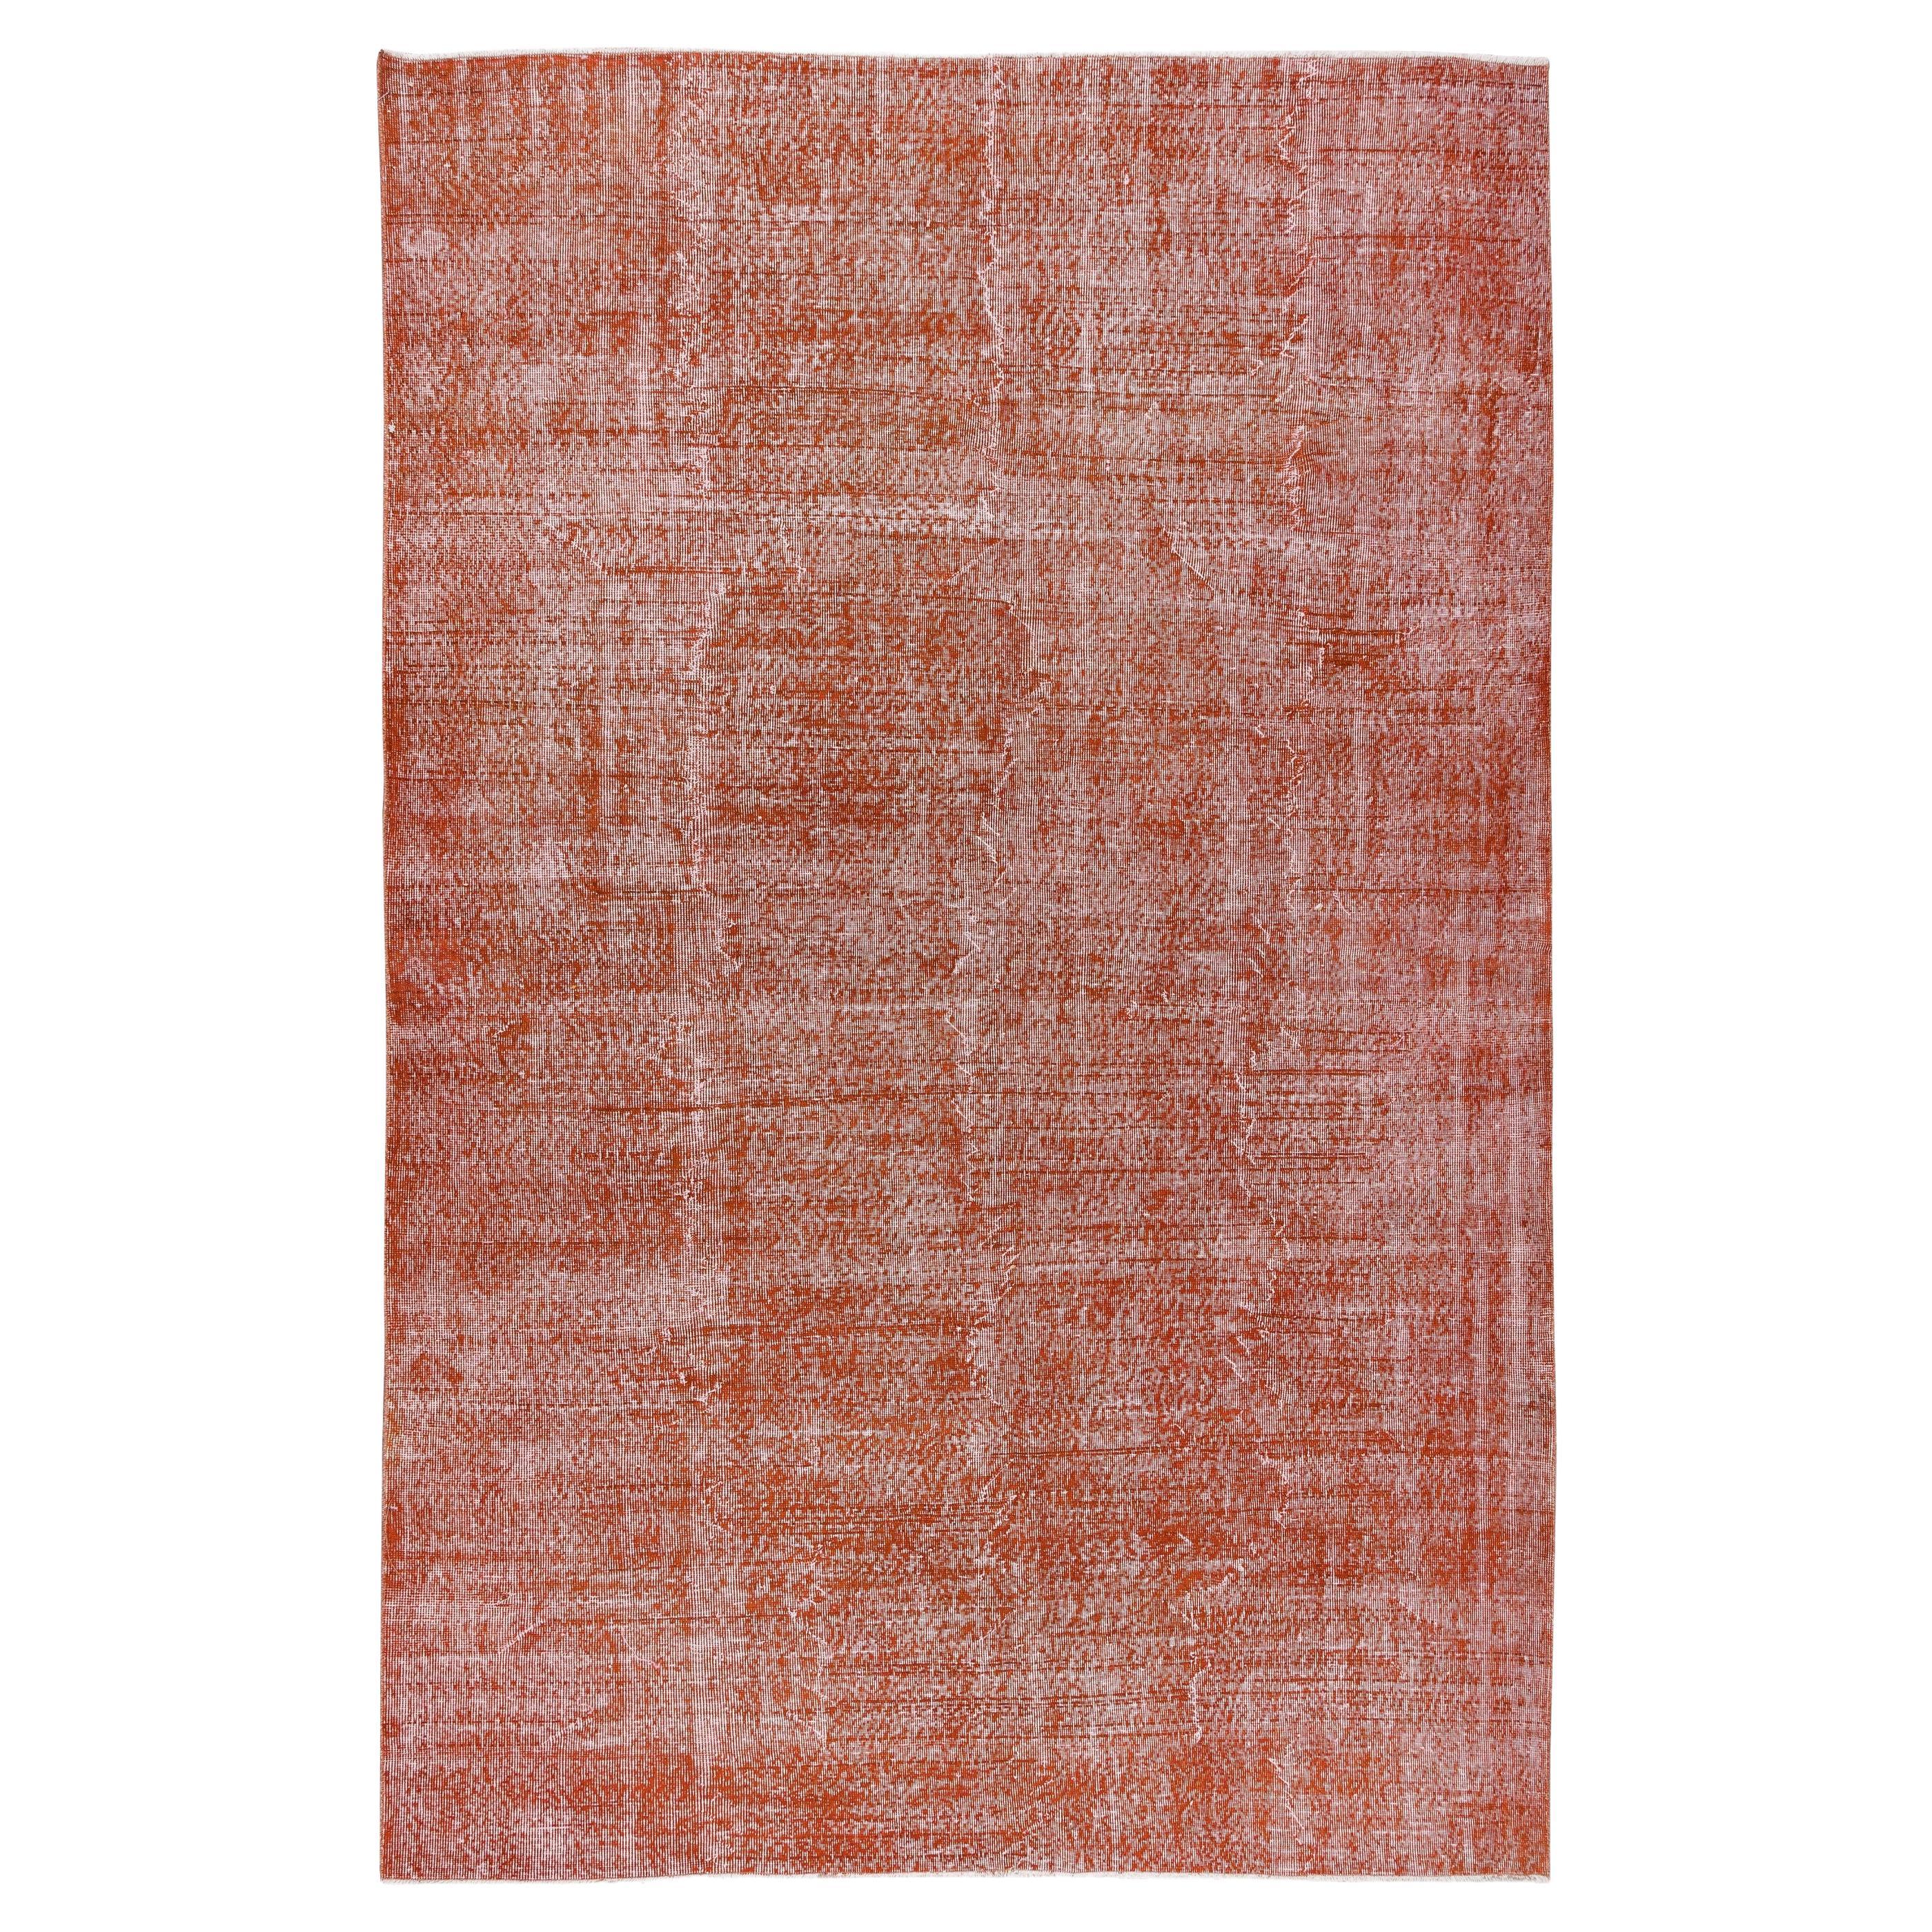 7.2x10.7 Ft Vintage Handmade Turkish Wool Area Rug, Plain Orange Modern Carpet For Sale